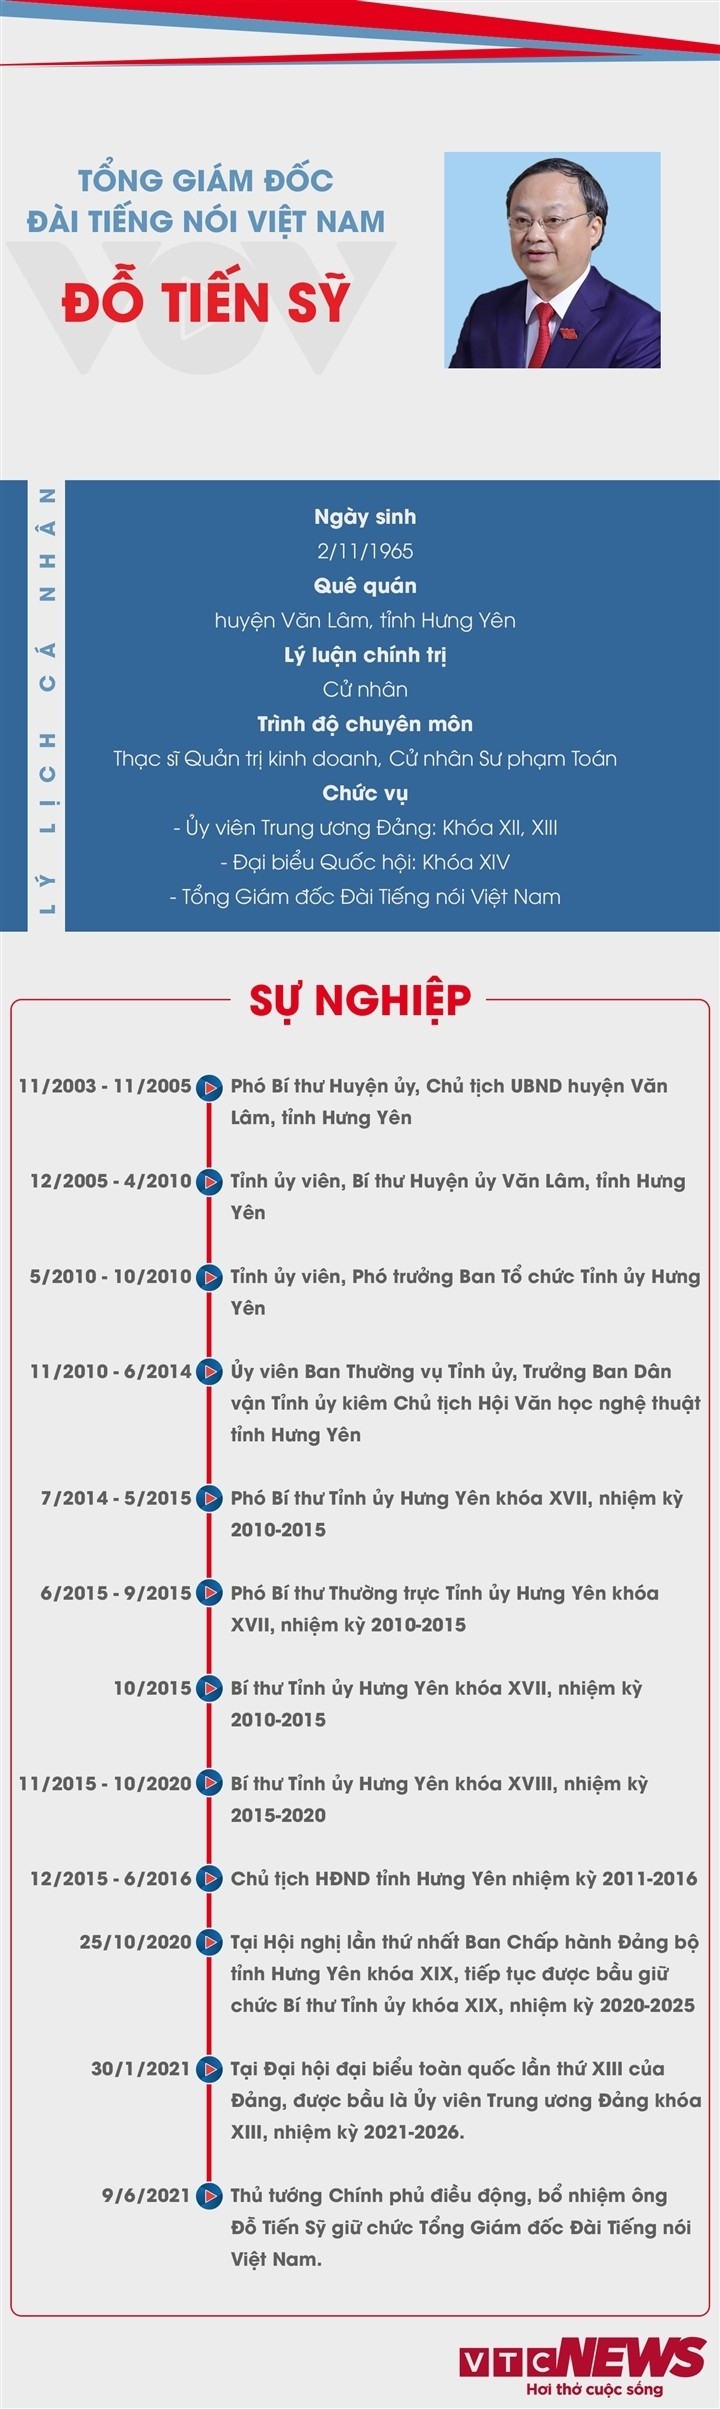 Trao quyet dinh bo nhiem ong Do Tien Sy lam TGD Dai Tieng noi Viet Nam-Hinh-4